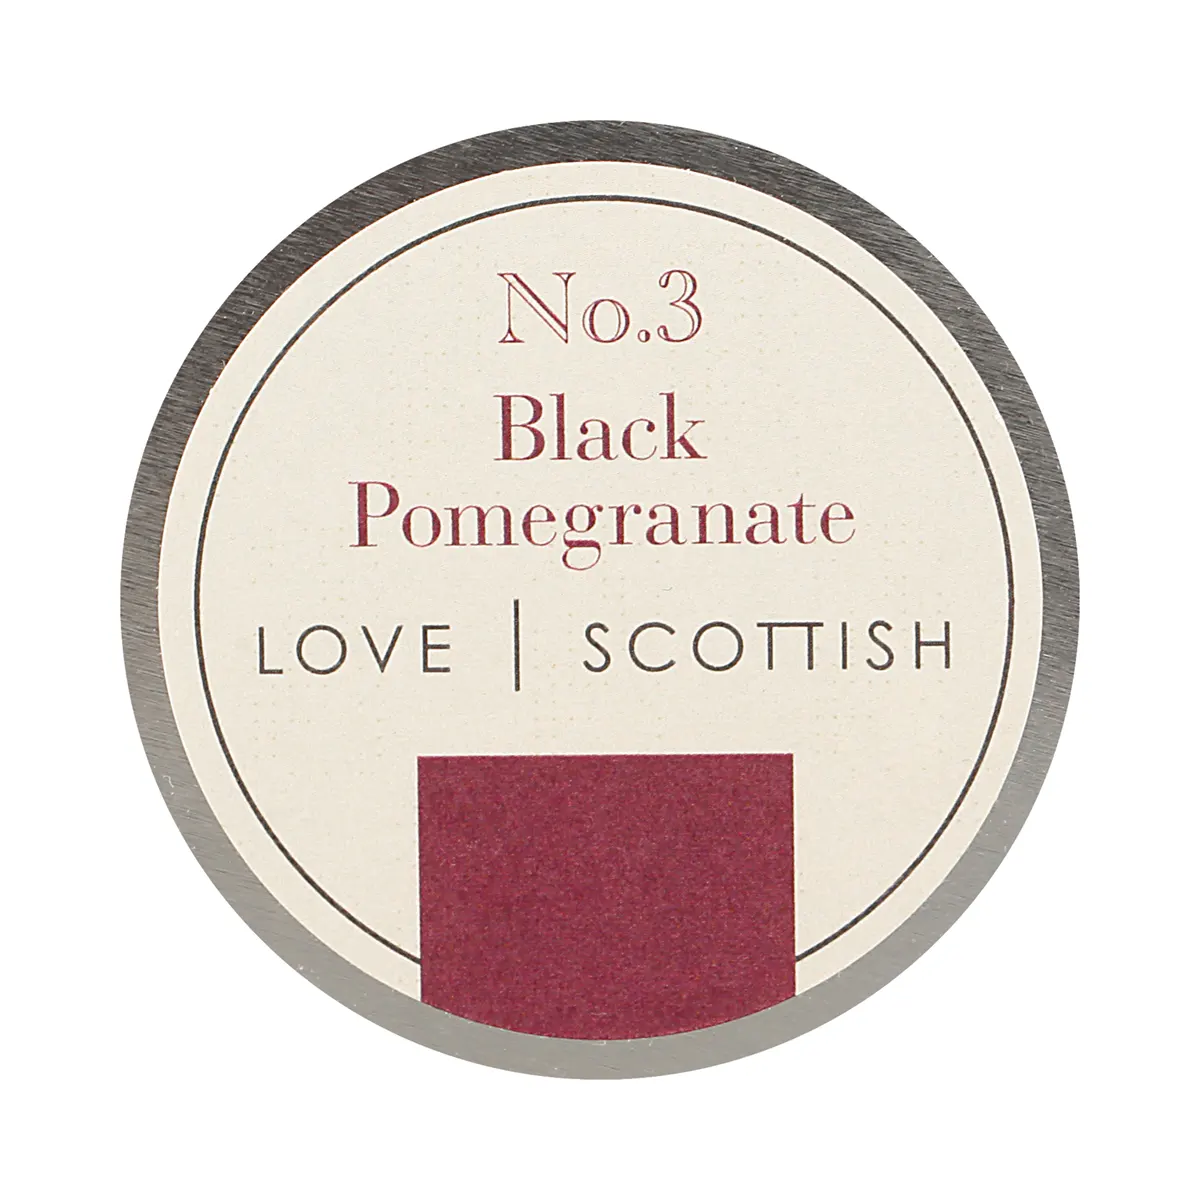 Love Scottish Travel Tin - Black Pomegranate - handgefertigte Duftkerze aus Kokoswachs